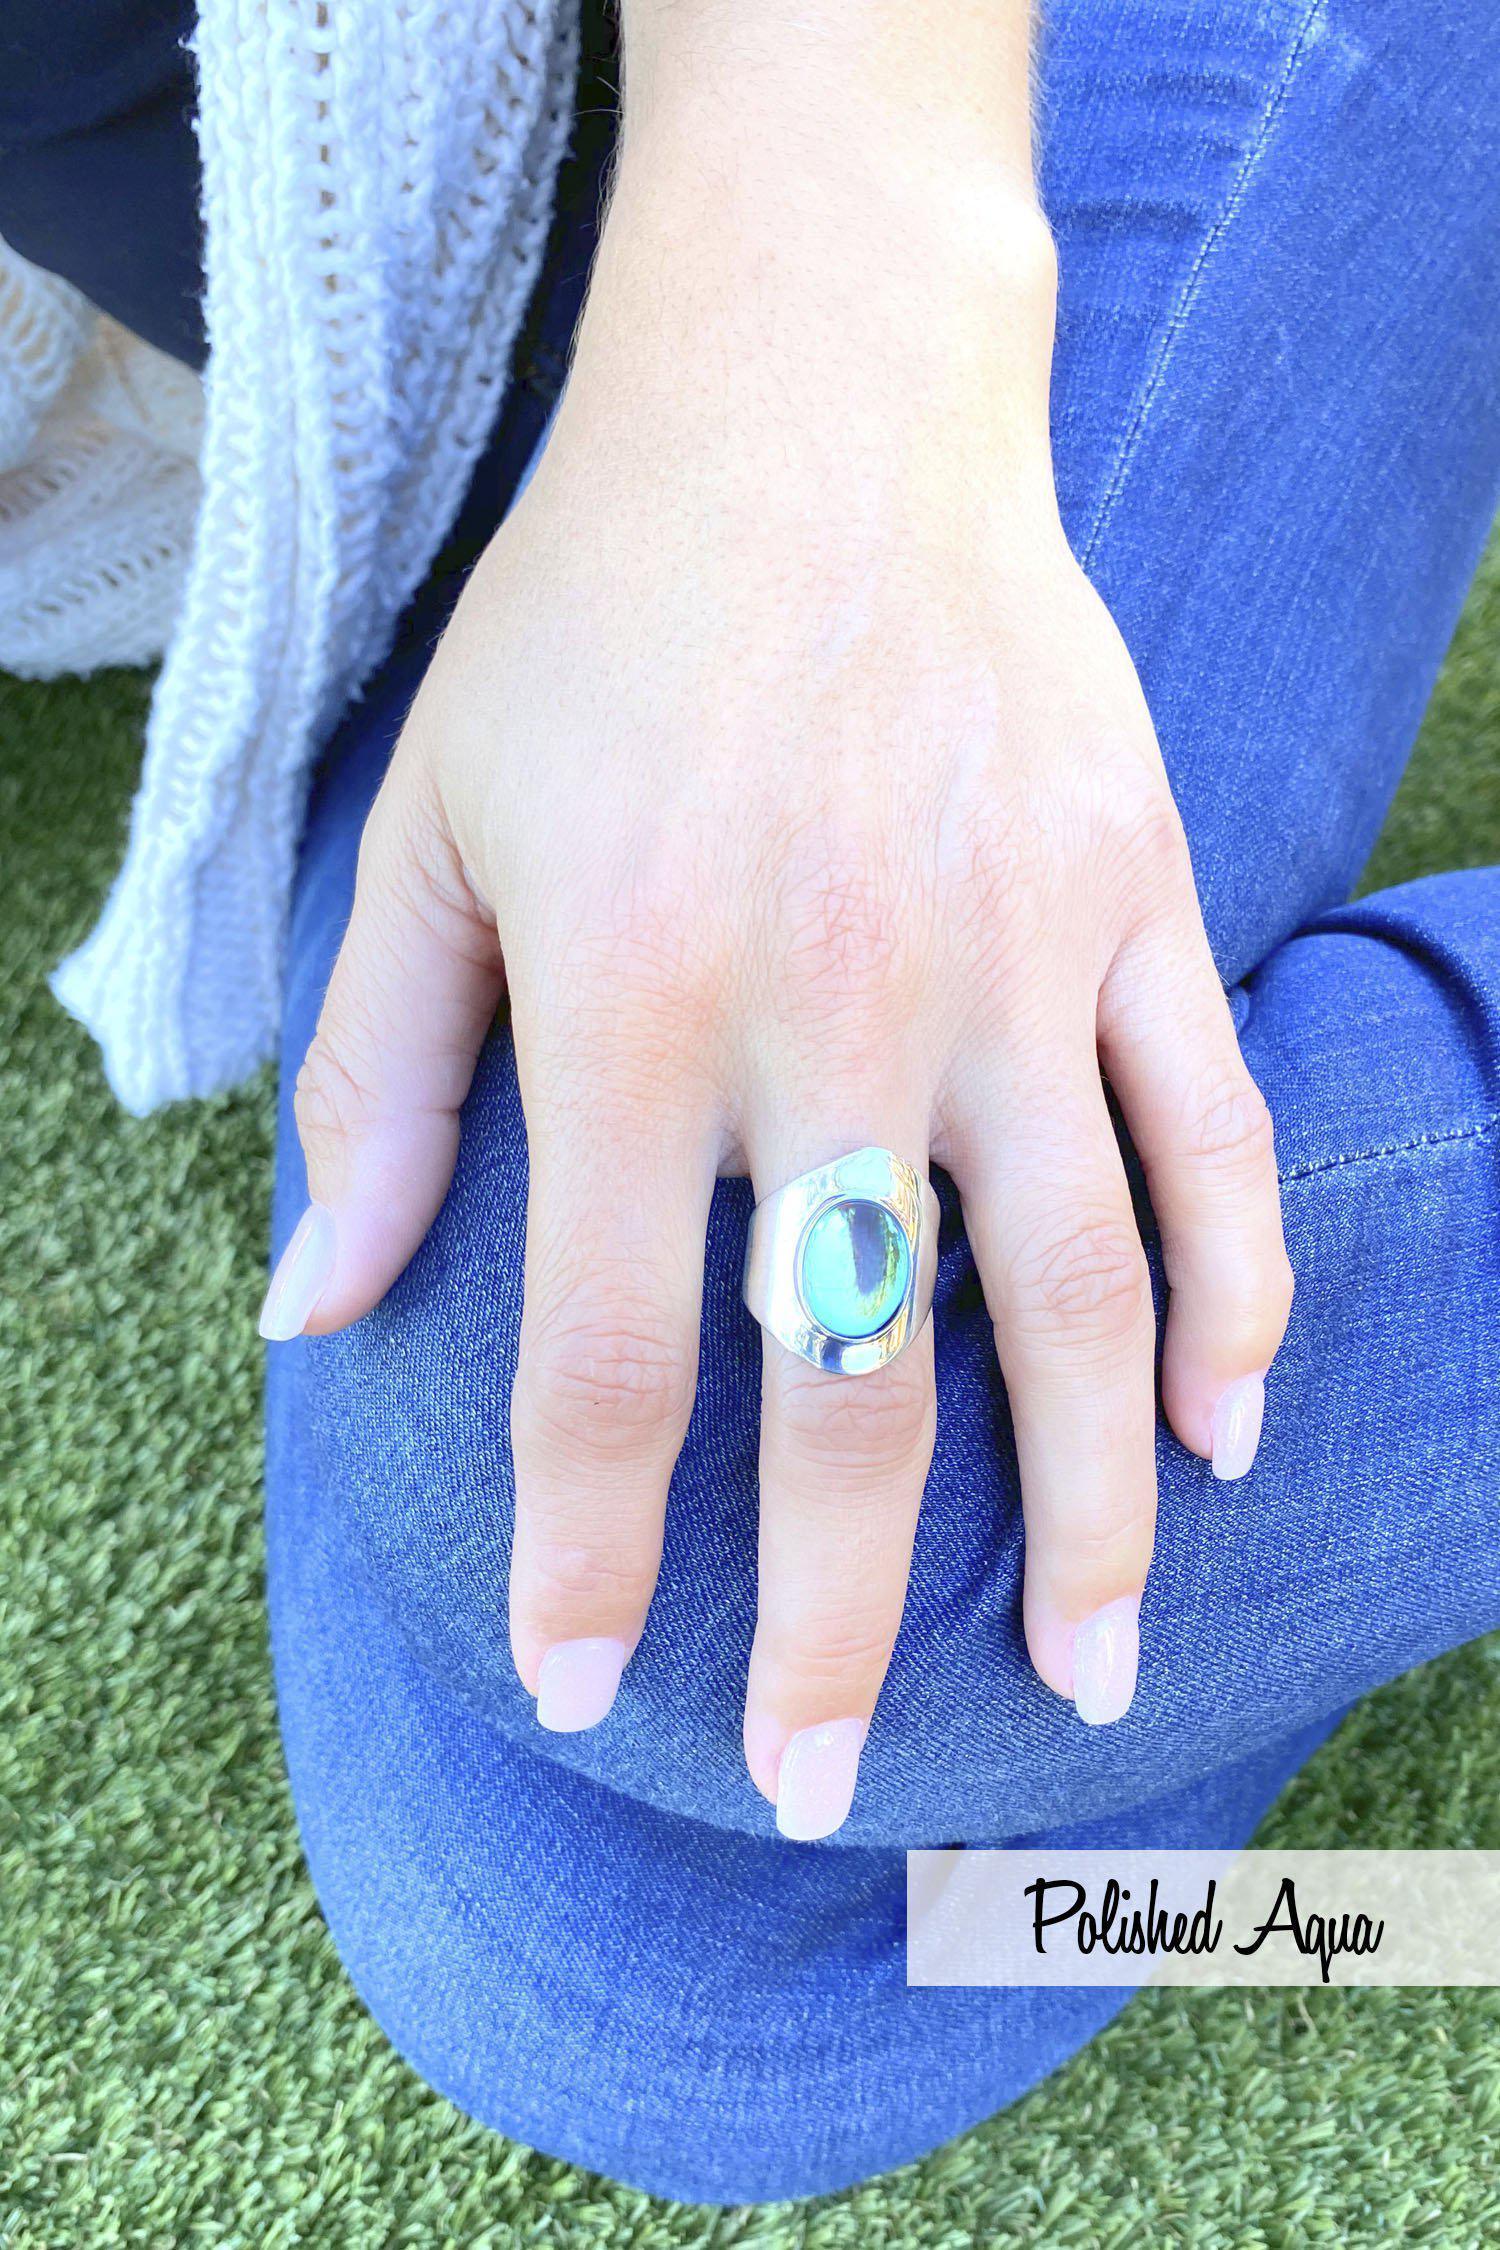 I just love blue nails 💙 : r/RedditLaqueristas